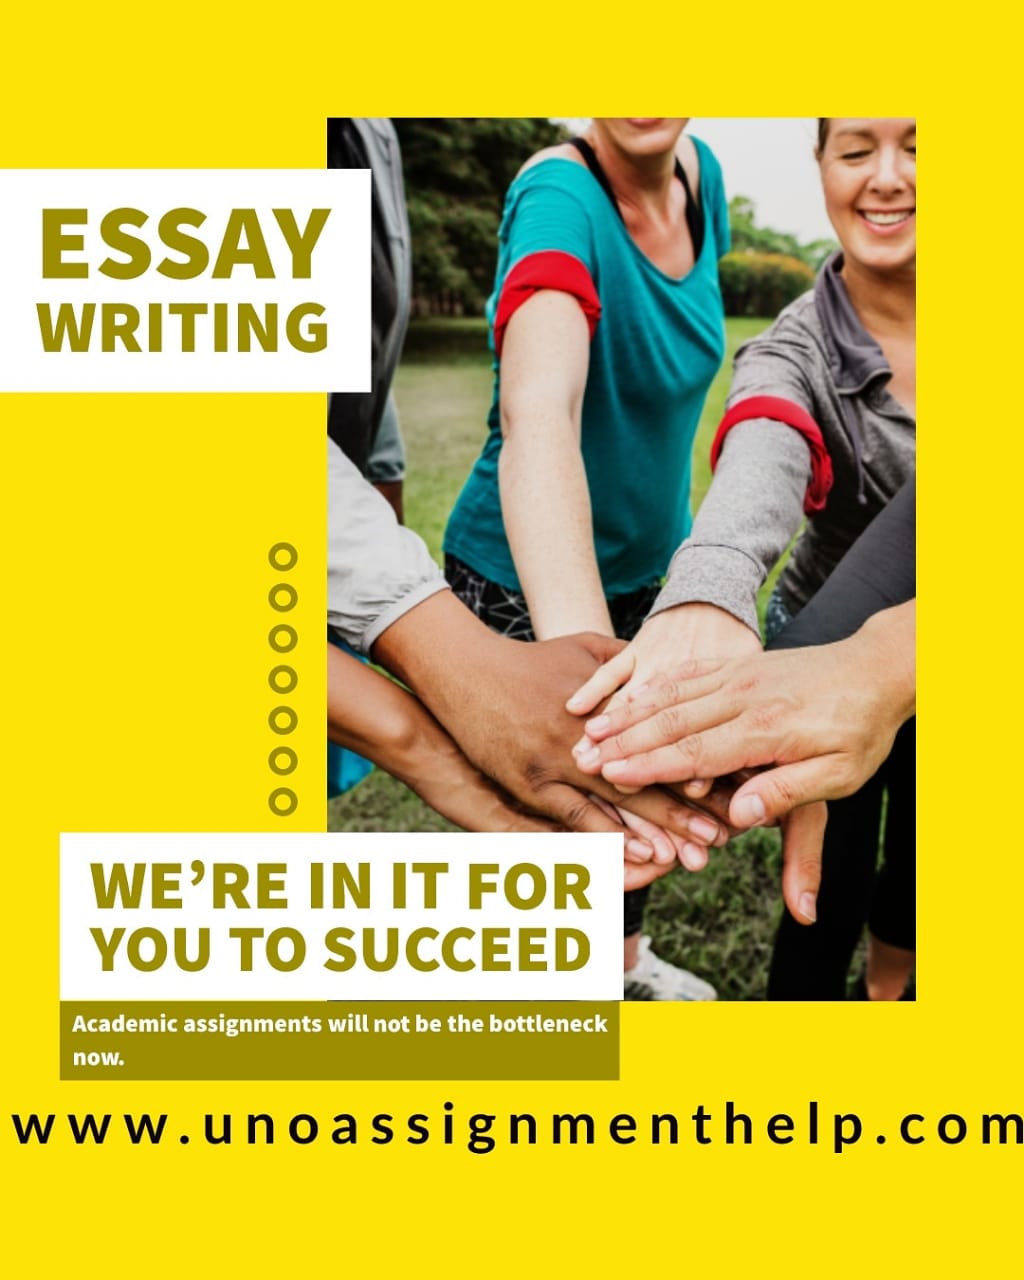 Usa essay bottleneck assignment problem and academic success